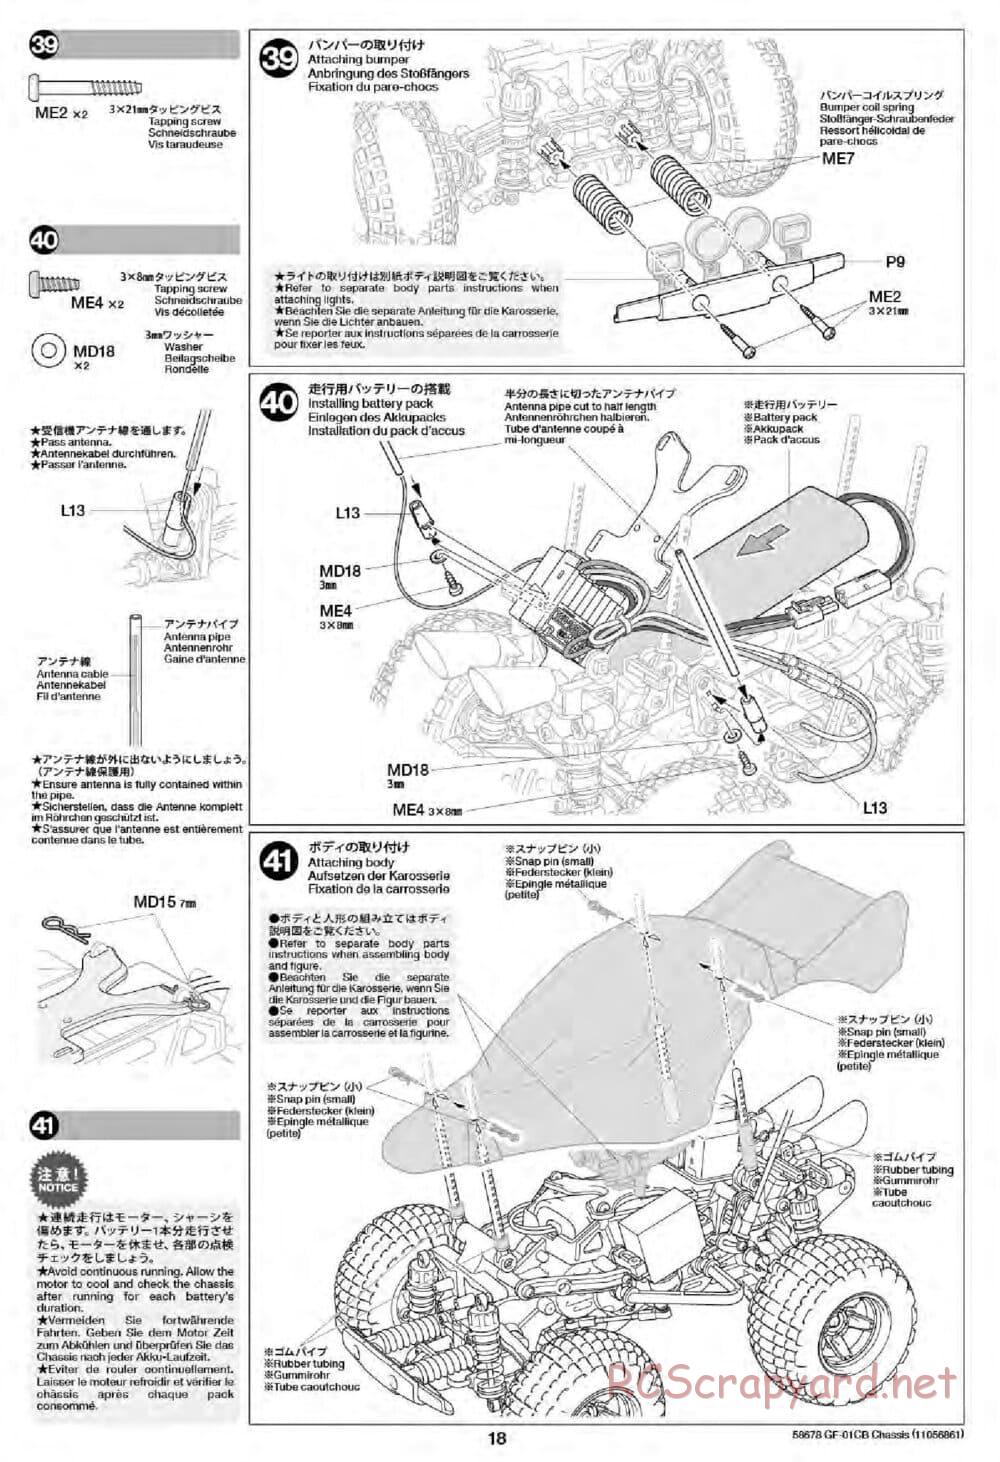 Tamiya - Comical Avante - GF-01CB Chassis - Manual - Page 20